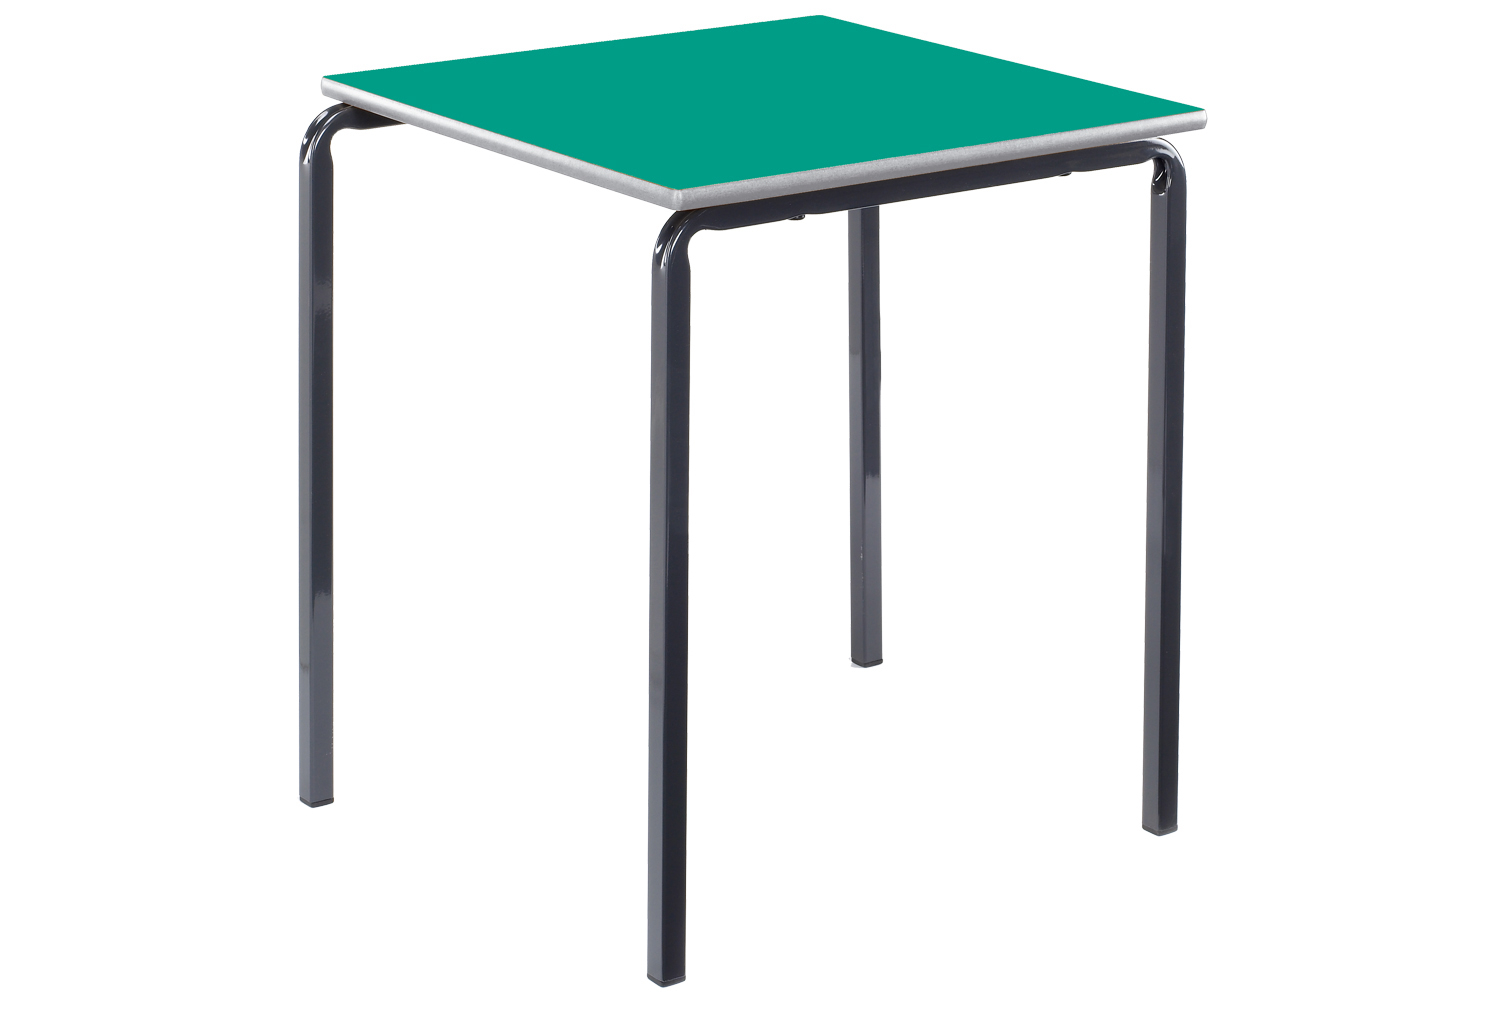 Qty 5 - Square Crush Bent Classroom Tables 11-14 Years, 60wx60dx71h (cm), Black Frame, Ailsa Top, PU Blue Edge